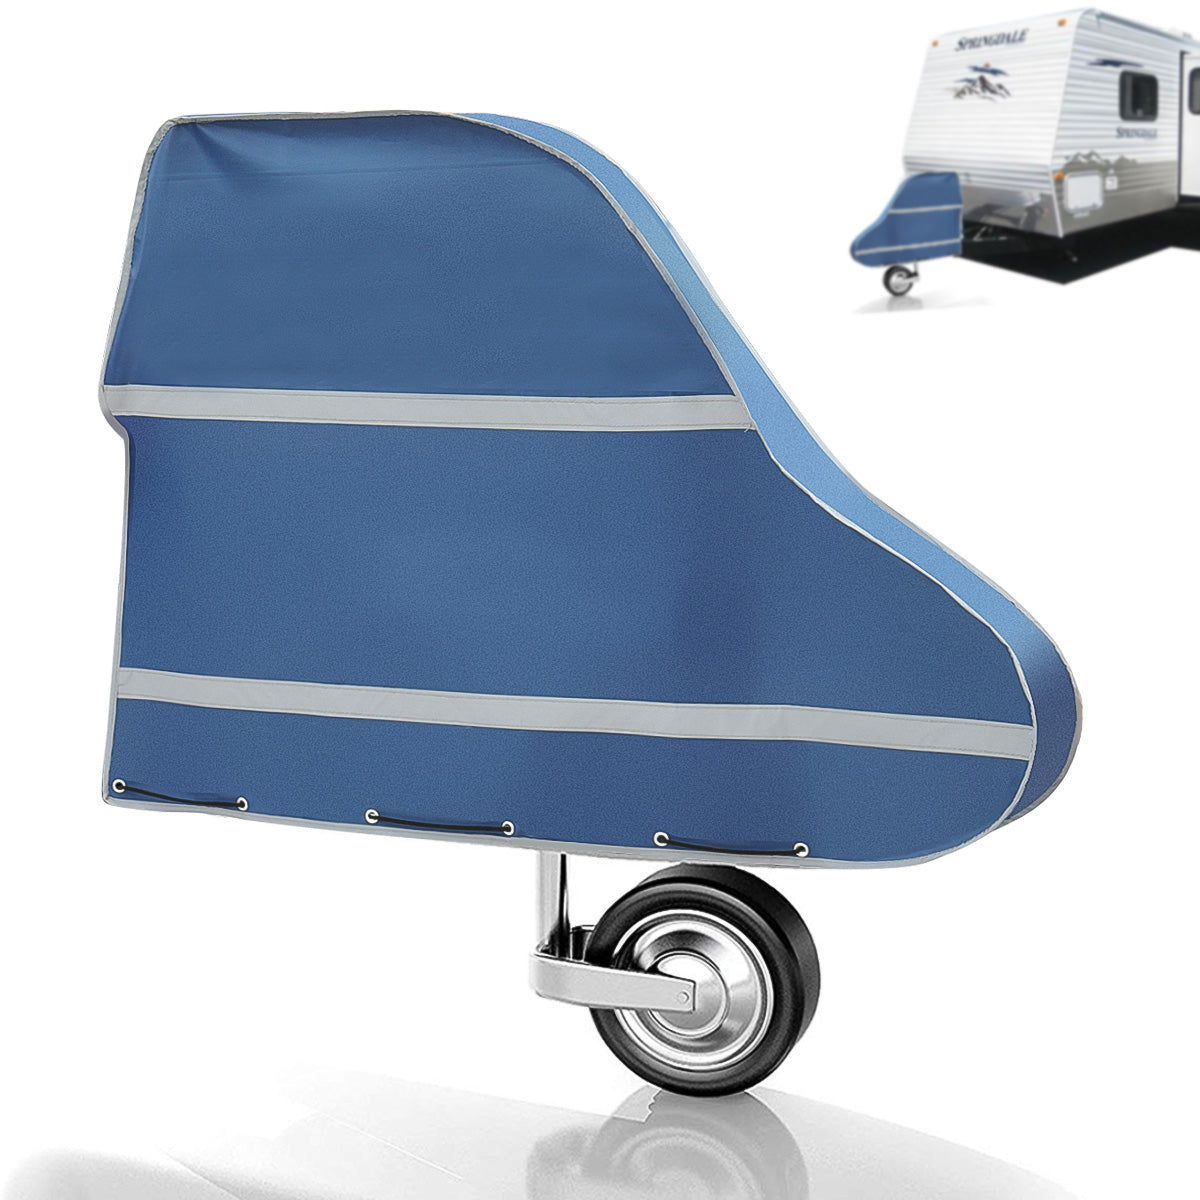 Dark Slate Blue Caravan Trailer Towing Hitch Tow Coupling Lock Cover Waterproof Oxford Fabric